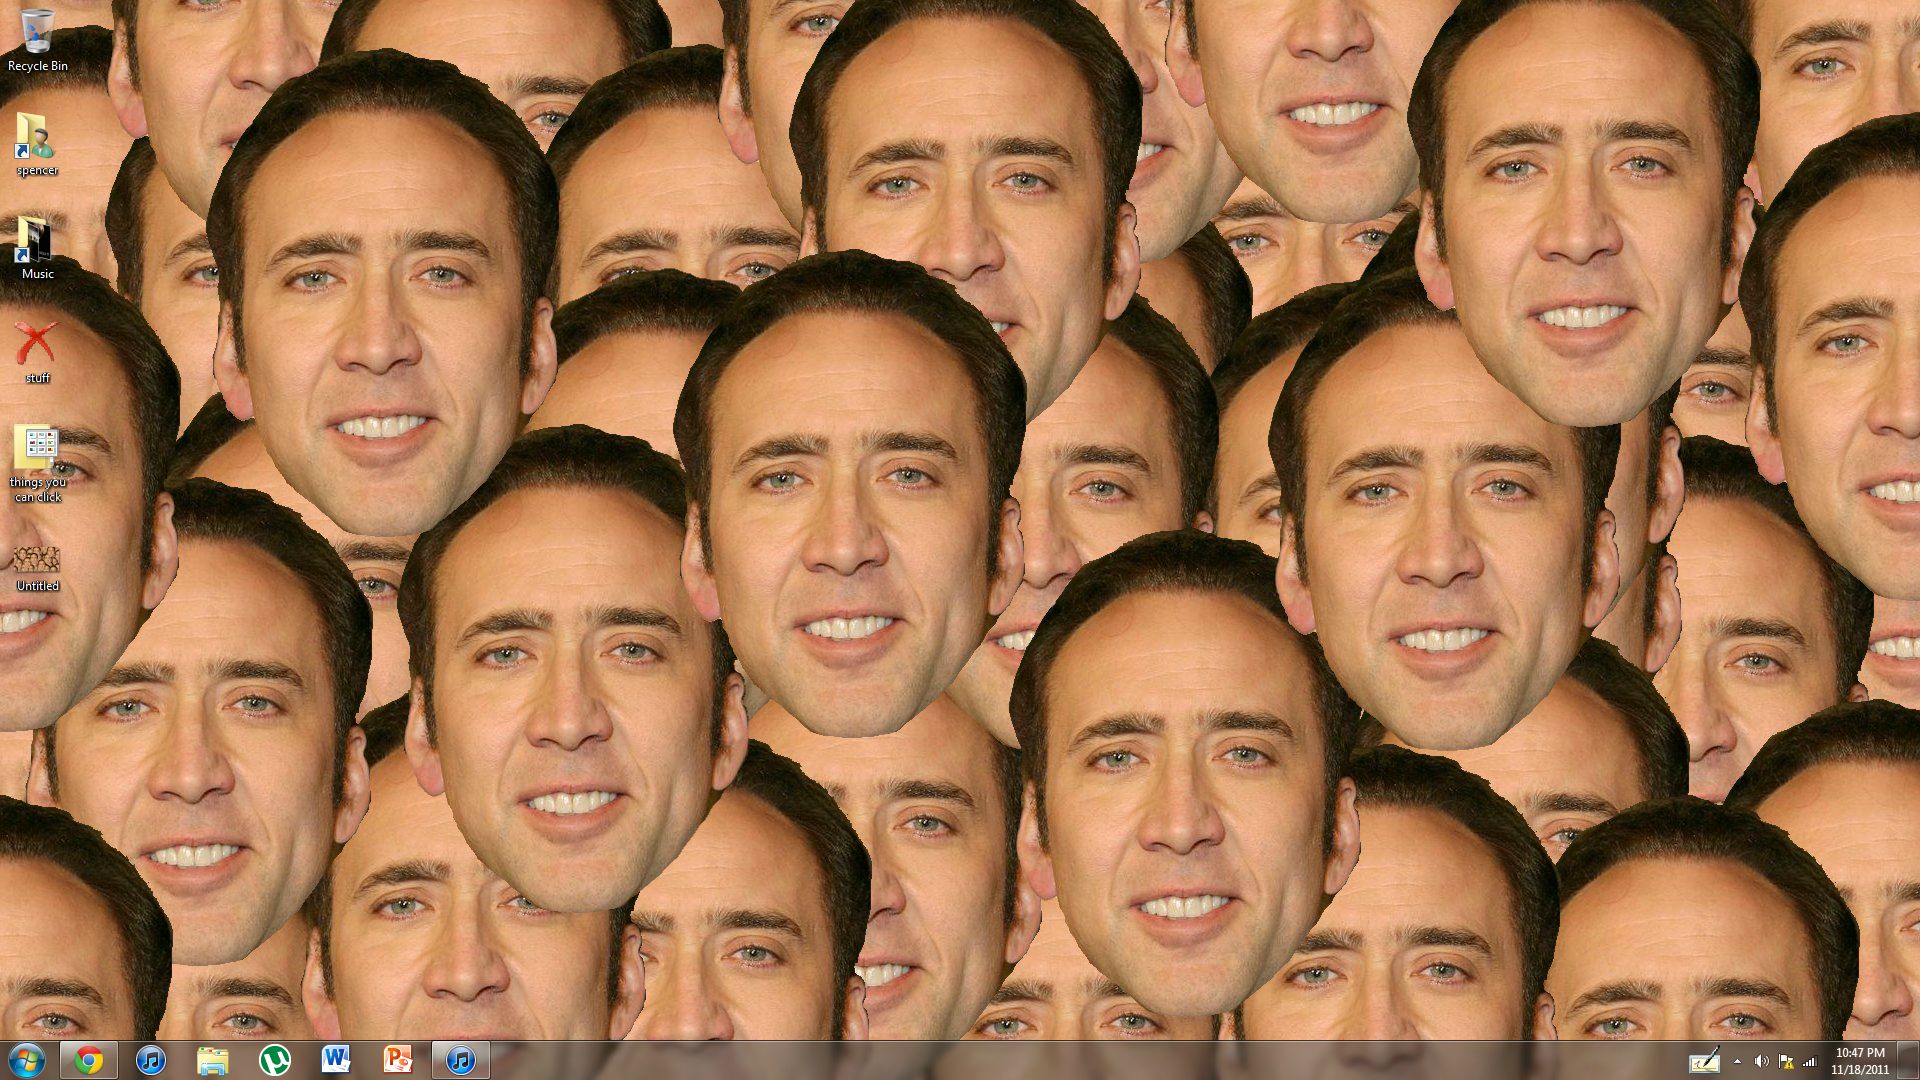 Nicolas Cage Wallpapers